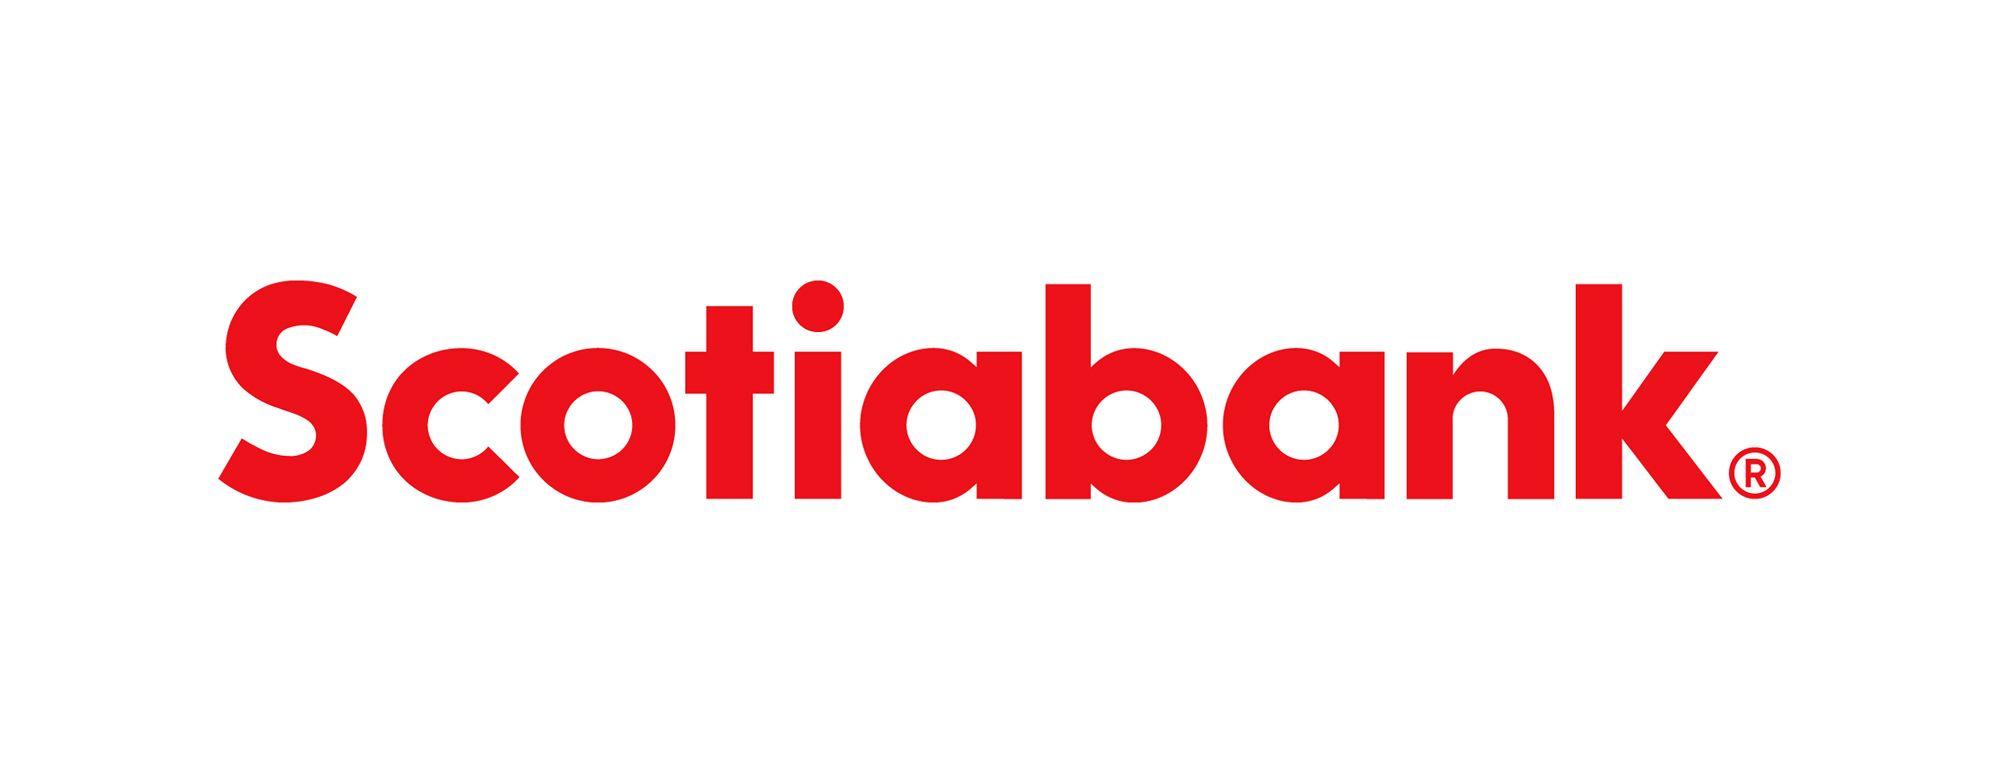 Less Logo - Less is More? Scotiabank Rebrands their Identity - Alfalfa Studio